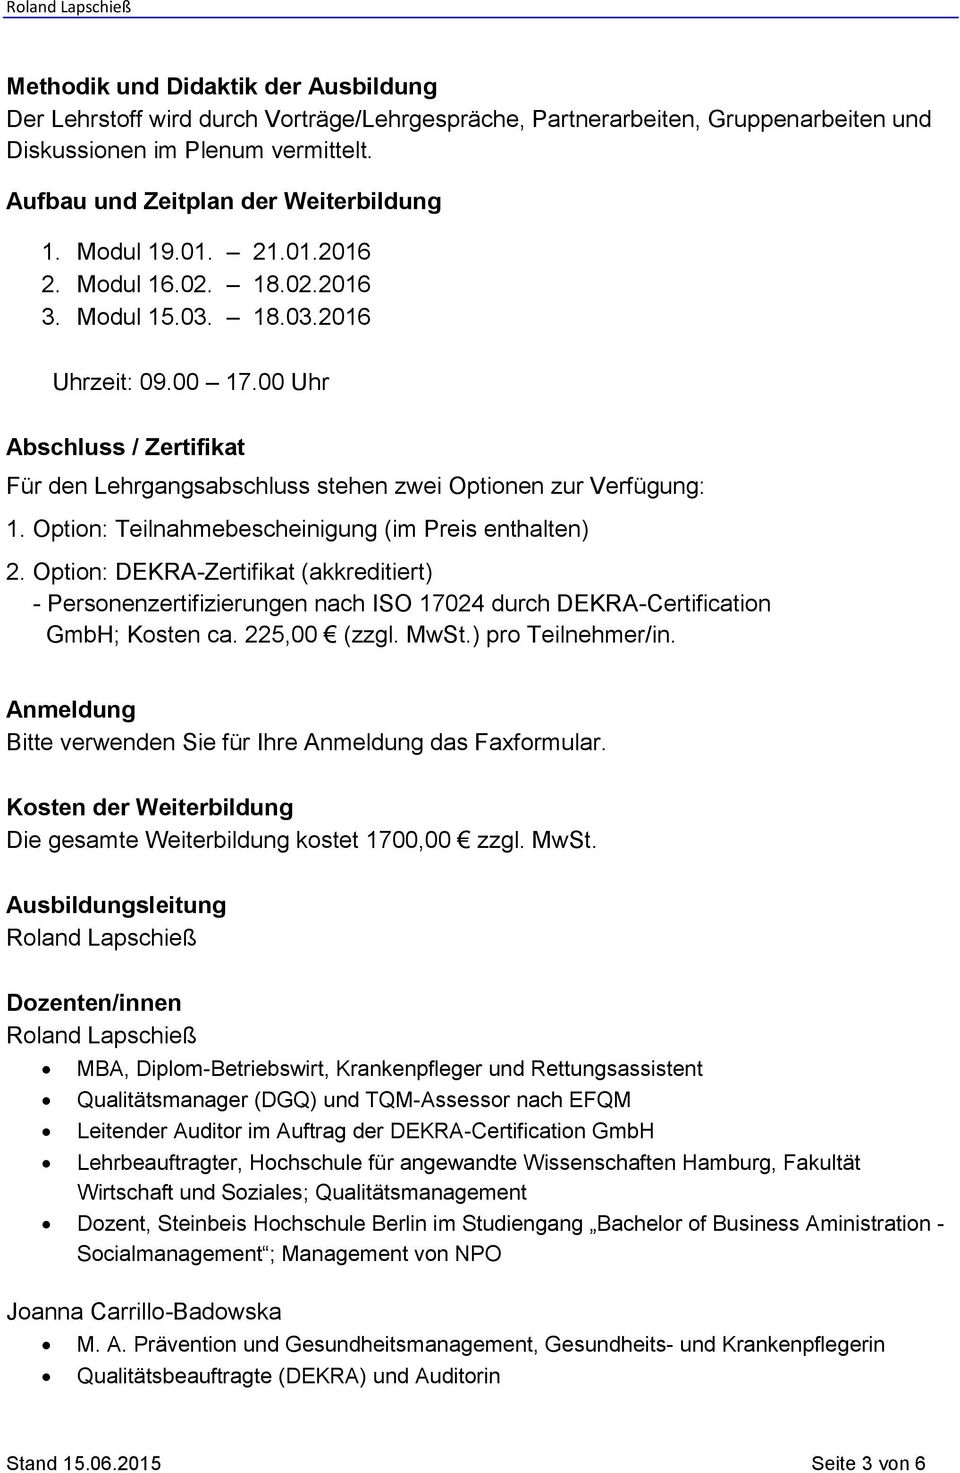 Option: Teilnahmebescheinigung (im Preis enthalten) 2. Option: DEKRA-Zertifikat (akkreditiert) - Personenzertifizierungen nach ISO 17024 durch DEKRA-Certification GmbH; Kosten ca. 225,00 (zzgl. MwSt.